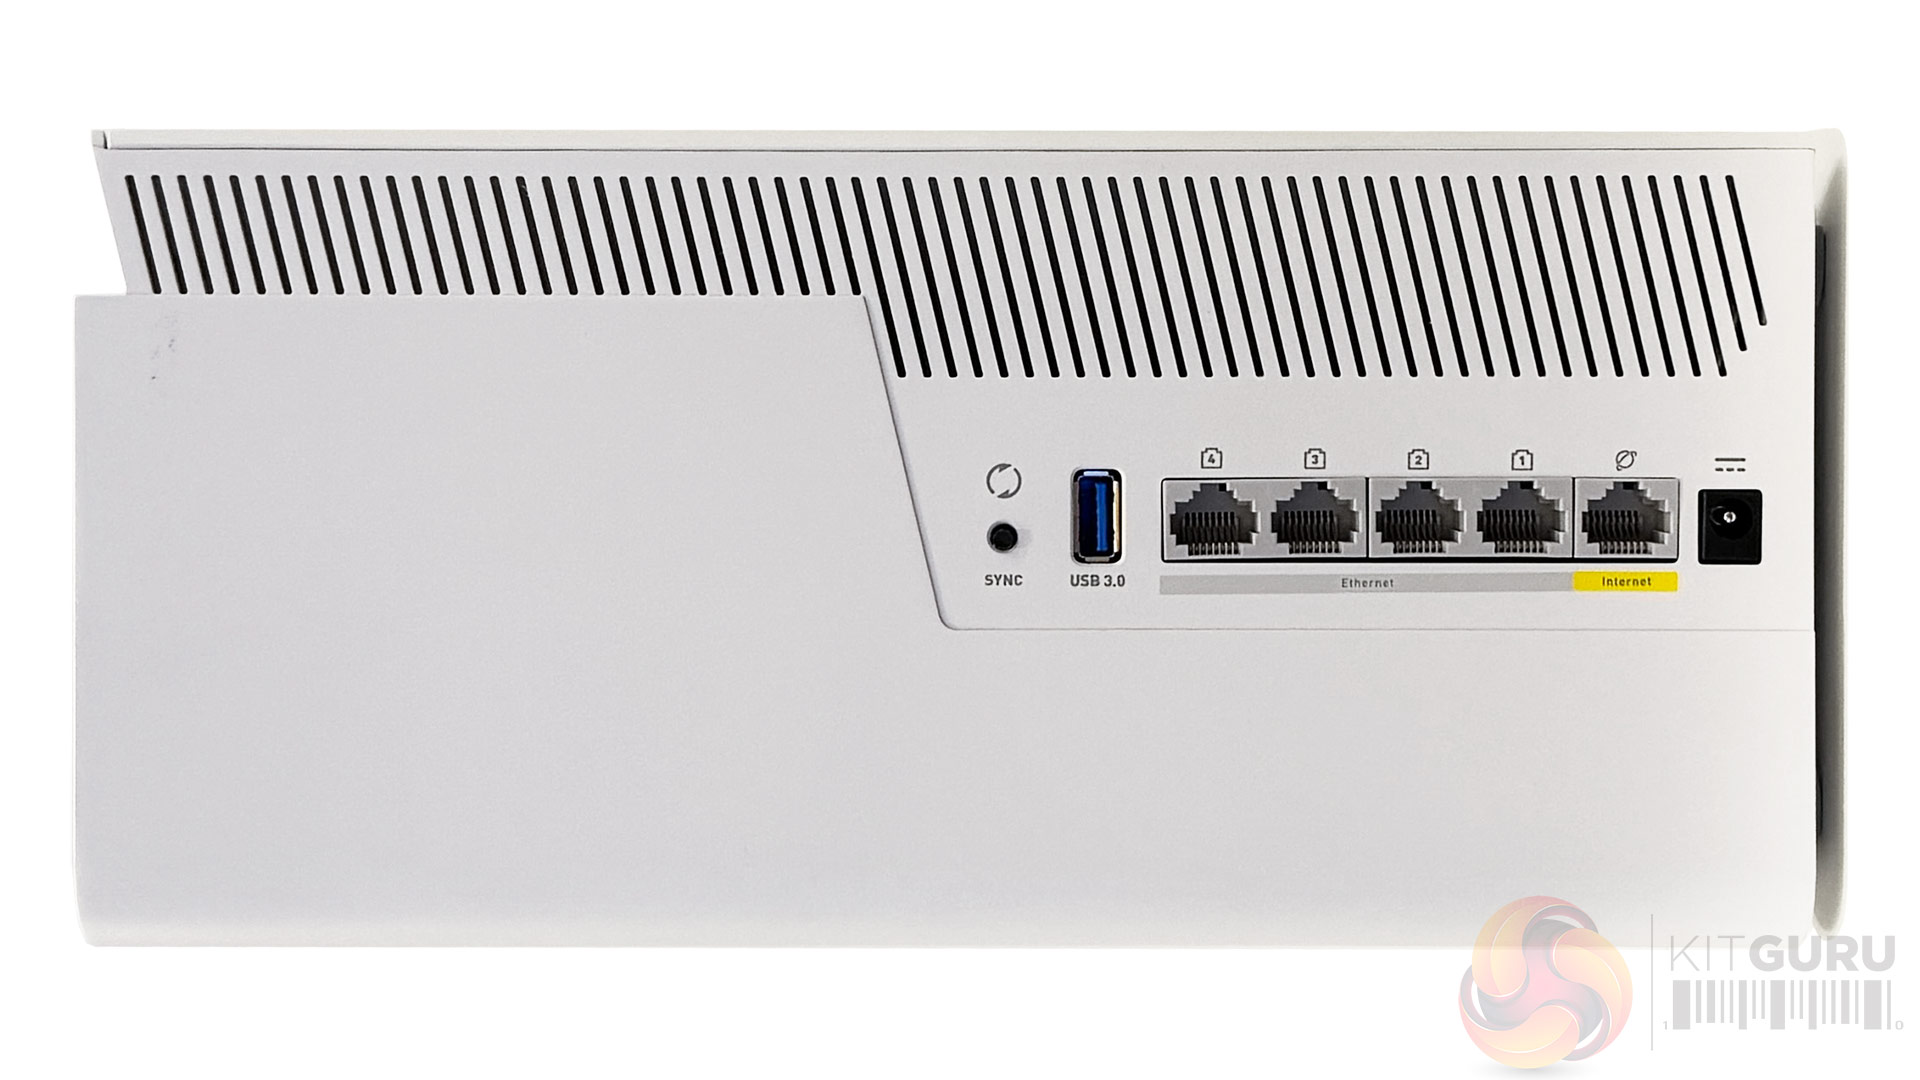 MSI RadiX BE22000 Turbo premium Wi-Fi 7 router announced at CES